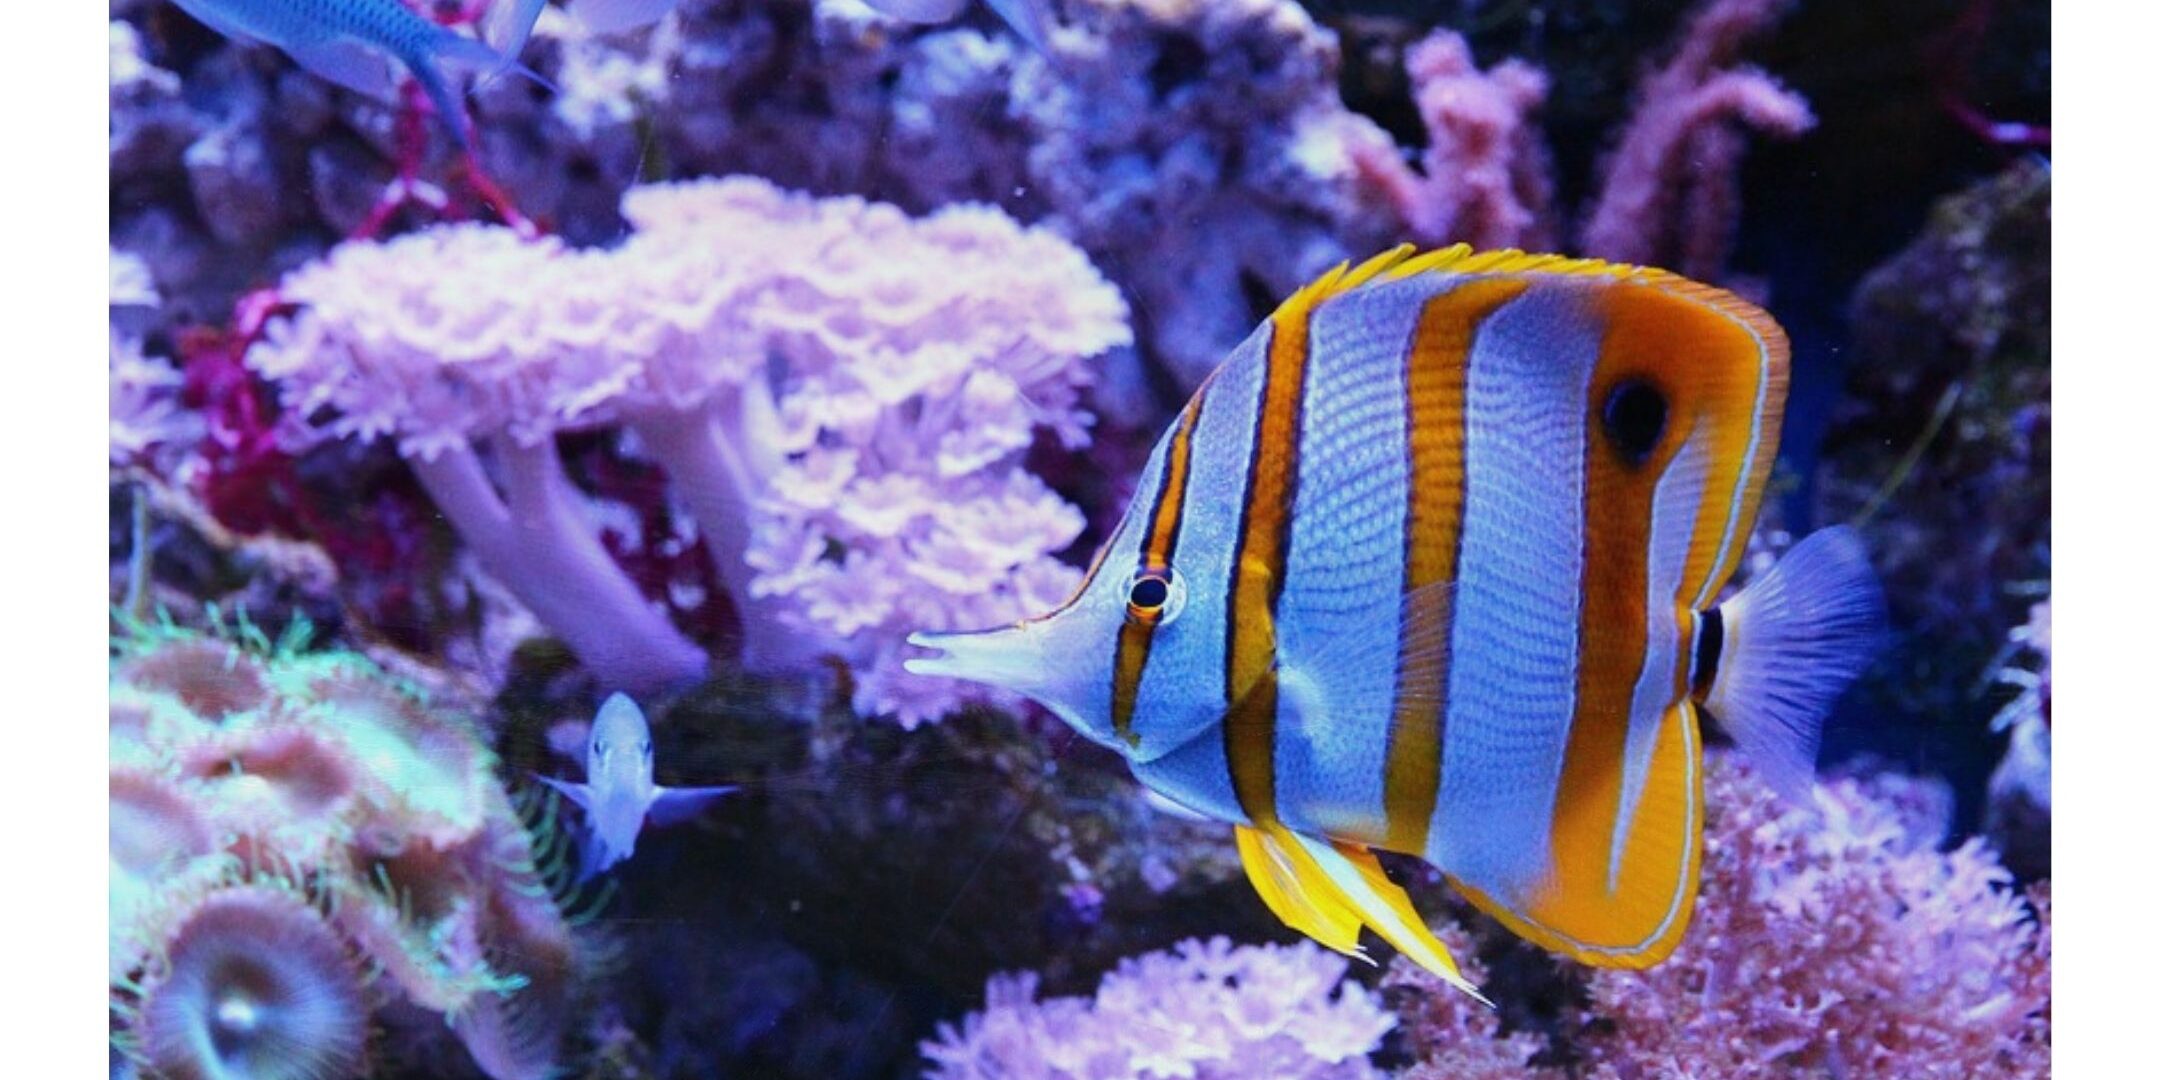 Best Schooling Fish For Saltwater Aquariums - Salt Water Coral Tank